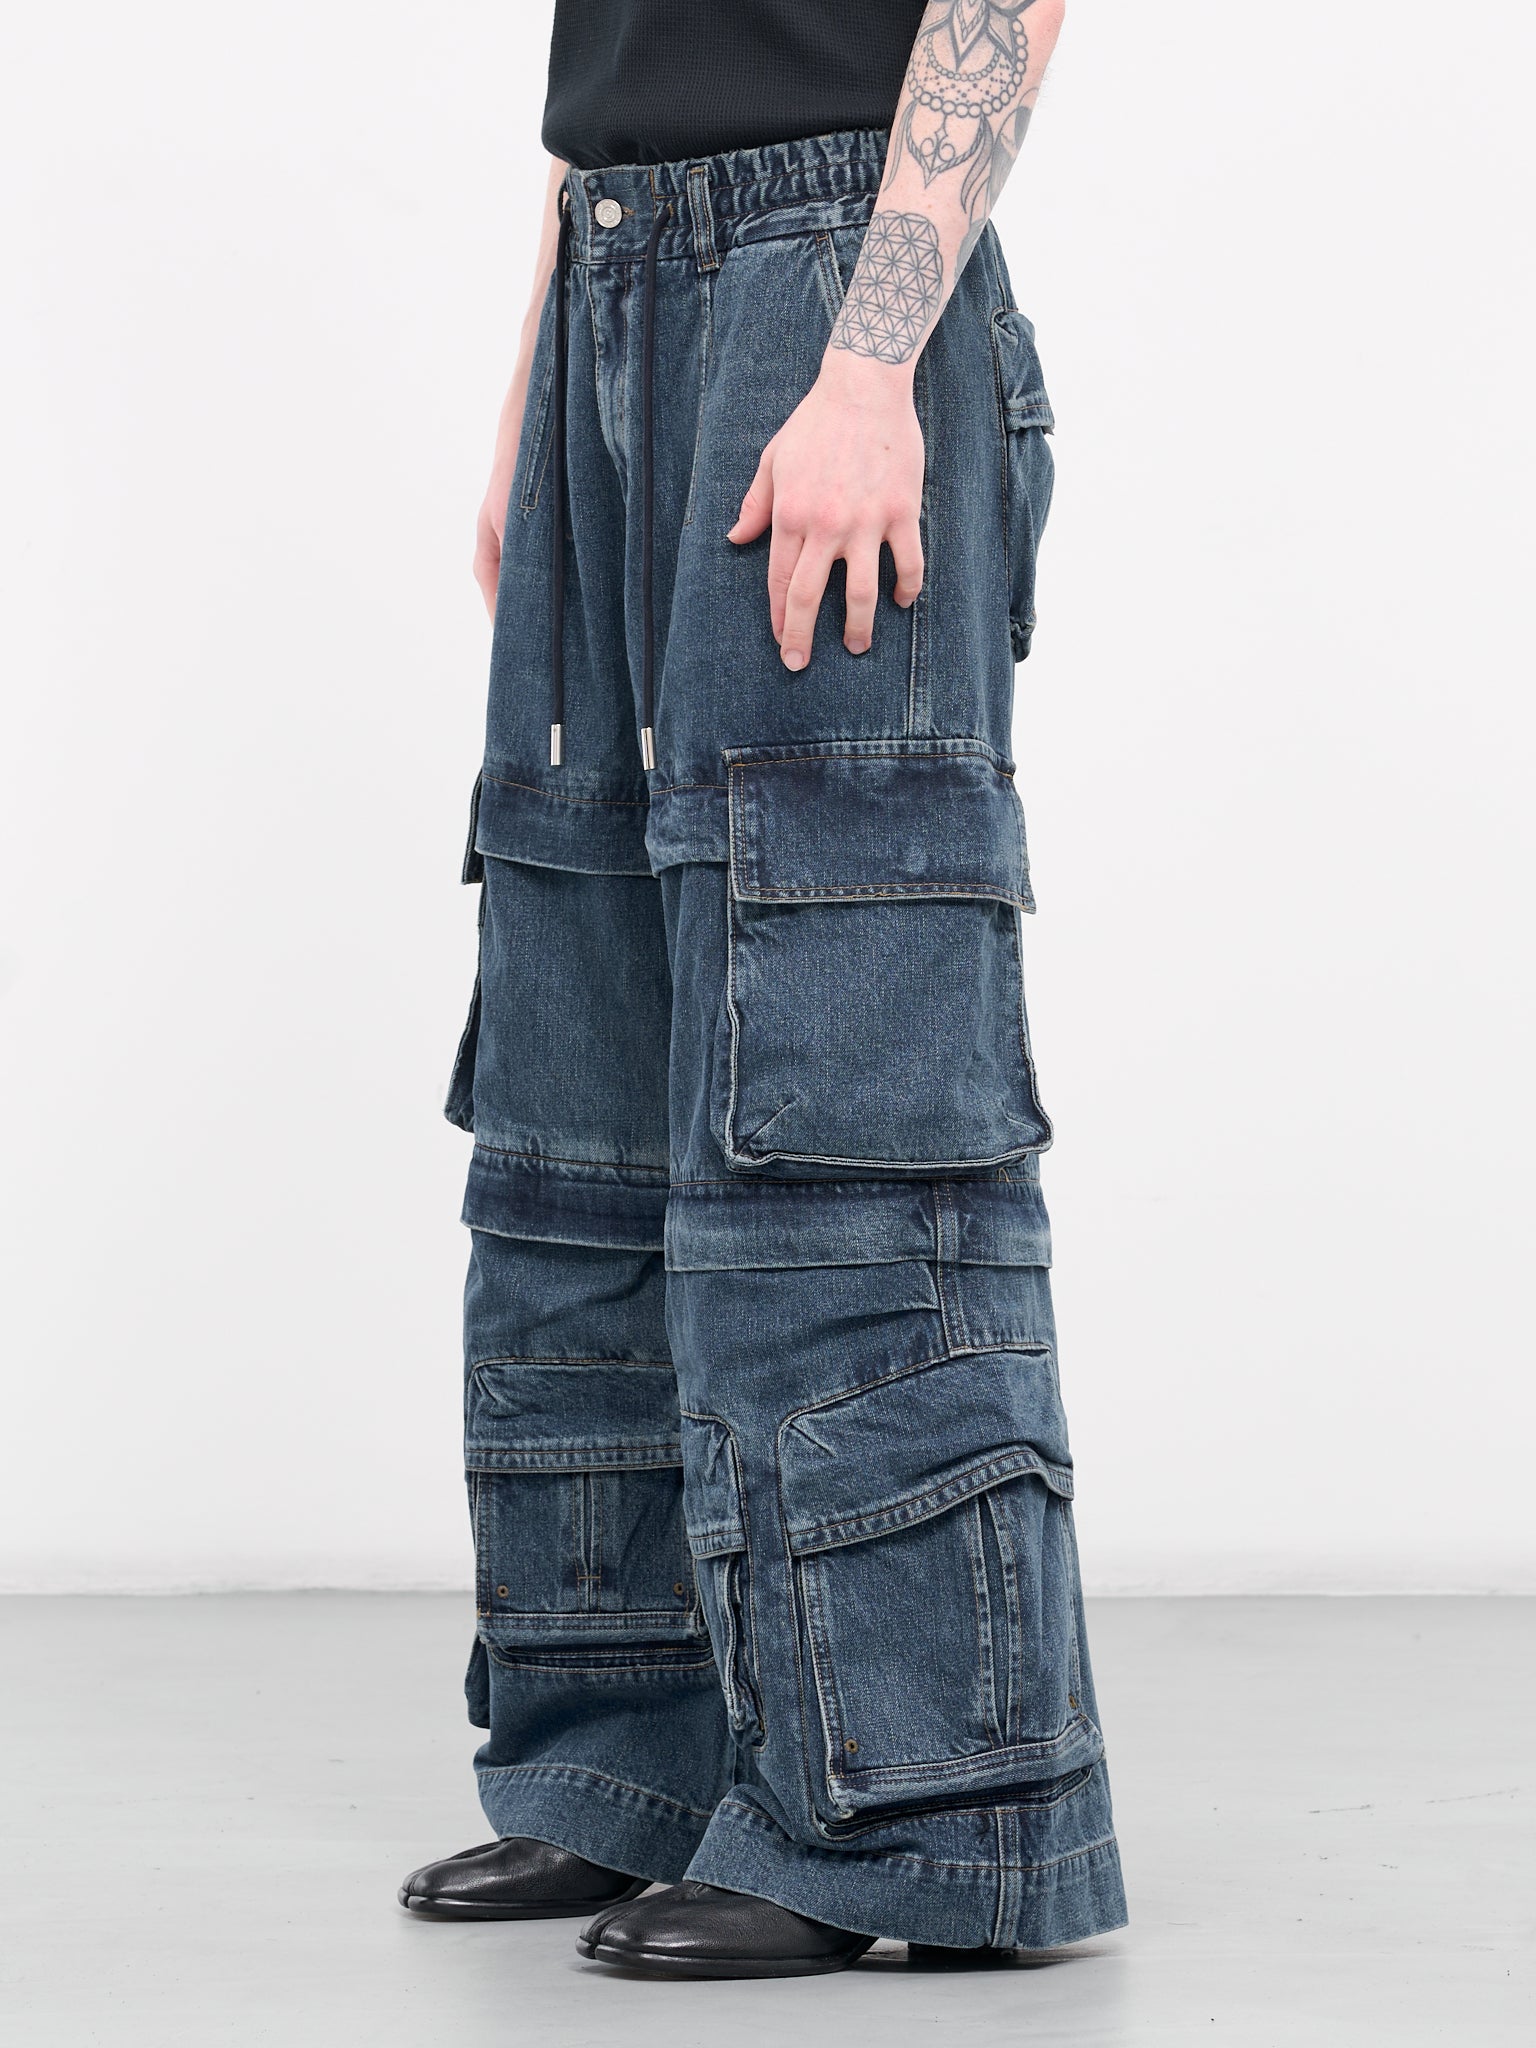 Distressed denim cargo pants in blue - Acne Studios